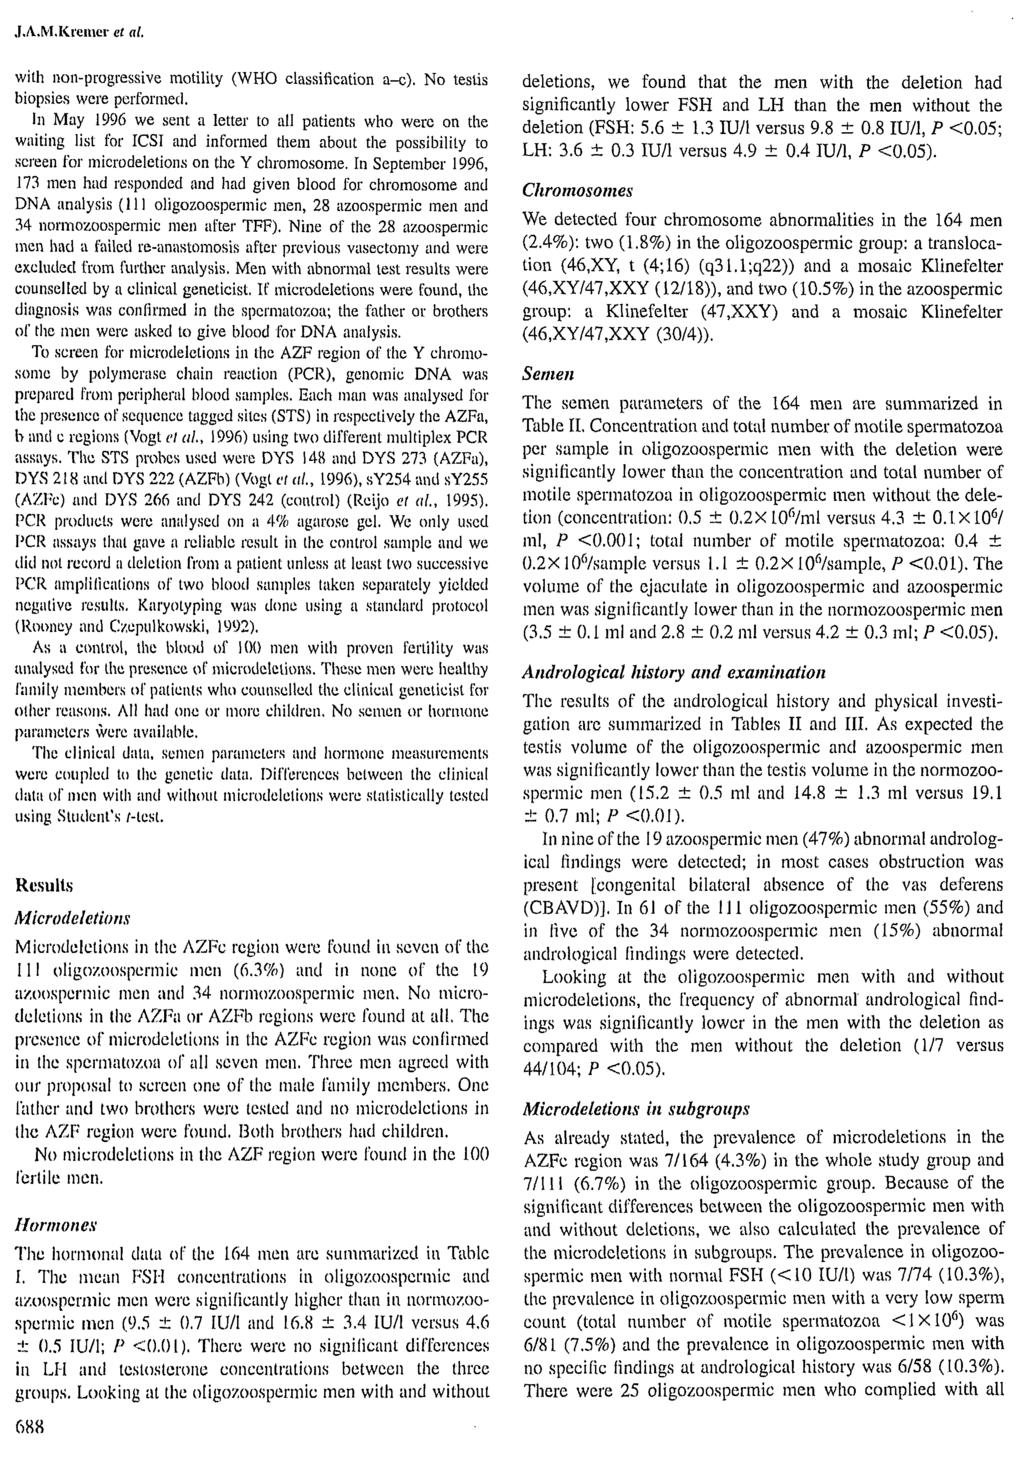 J.A.M.Kiemer et al. with non-progressive motility (WHO classification a-c). No testis biopsies were performed.